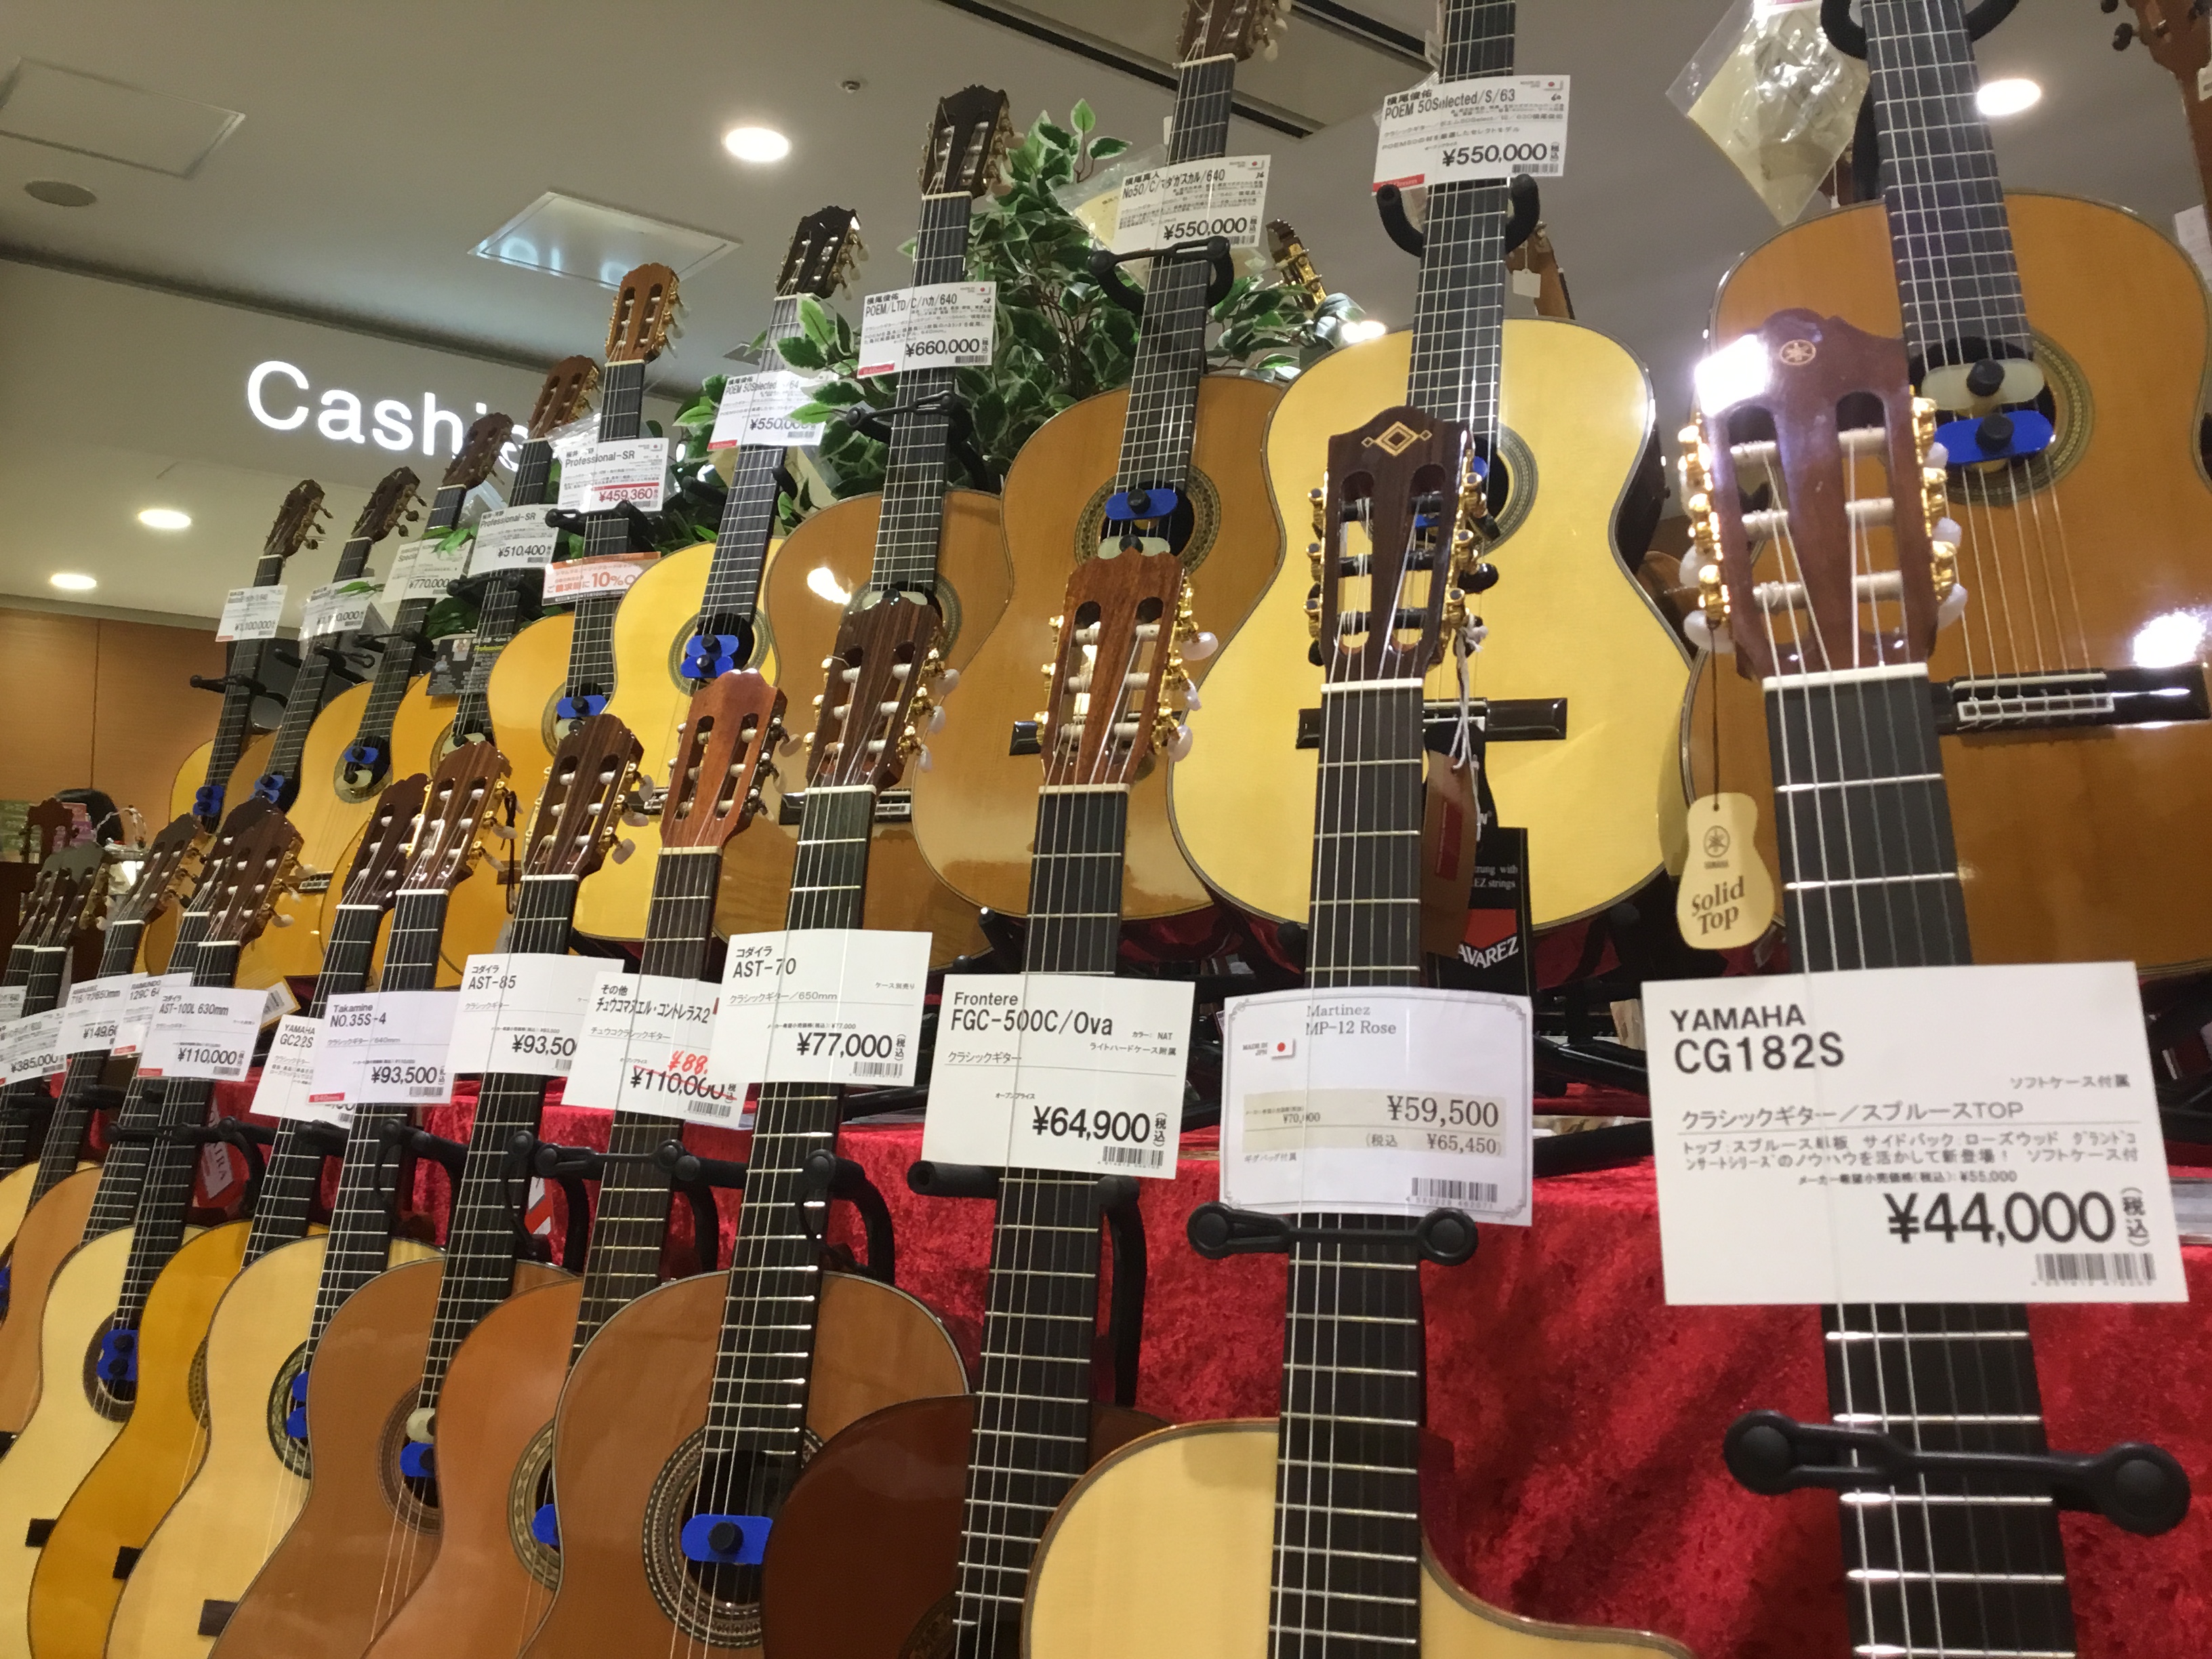 [https://www.shimamura.co.jp/shop/maebashi/guitar-bass-ukulele/20201031/4056:title=] *クラシックギターフェアを開催致します！ 普段店頭に並んでいないクラシックギターを約30本展示致します。 もちろん試奏も可能ですの […]